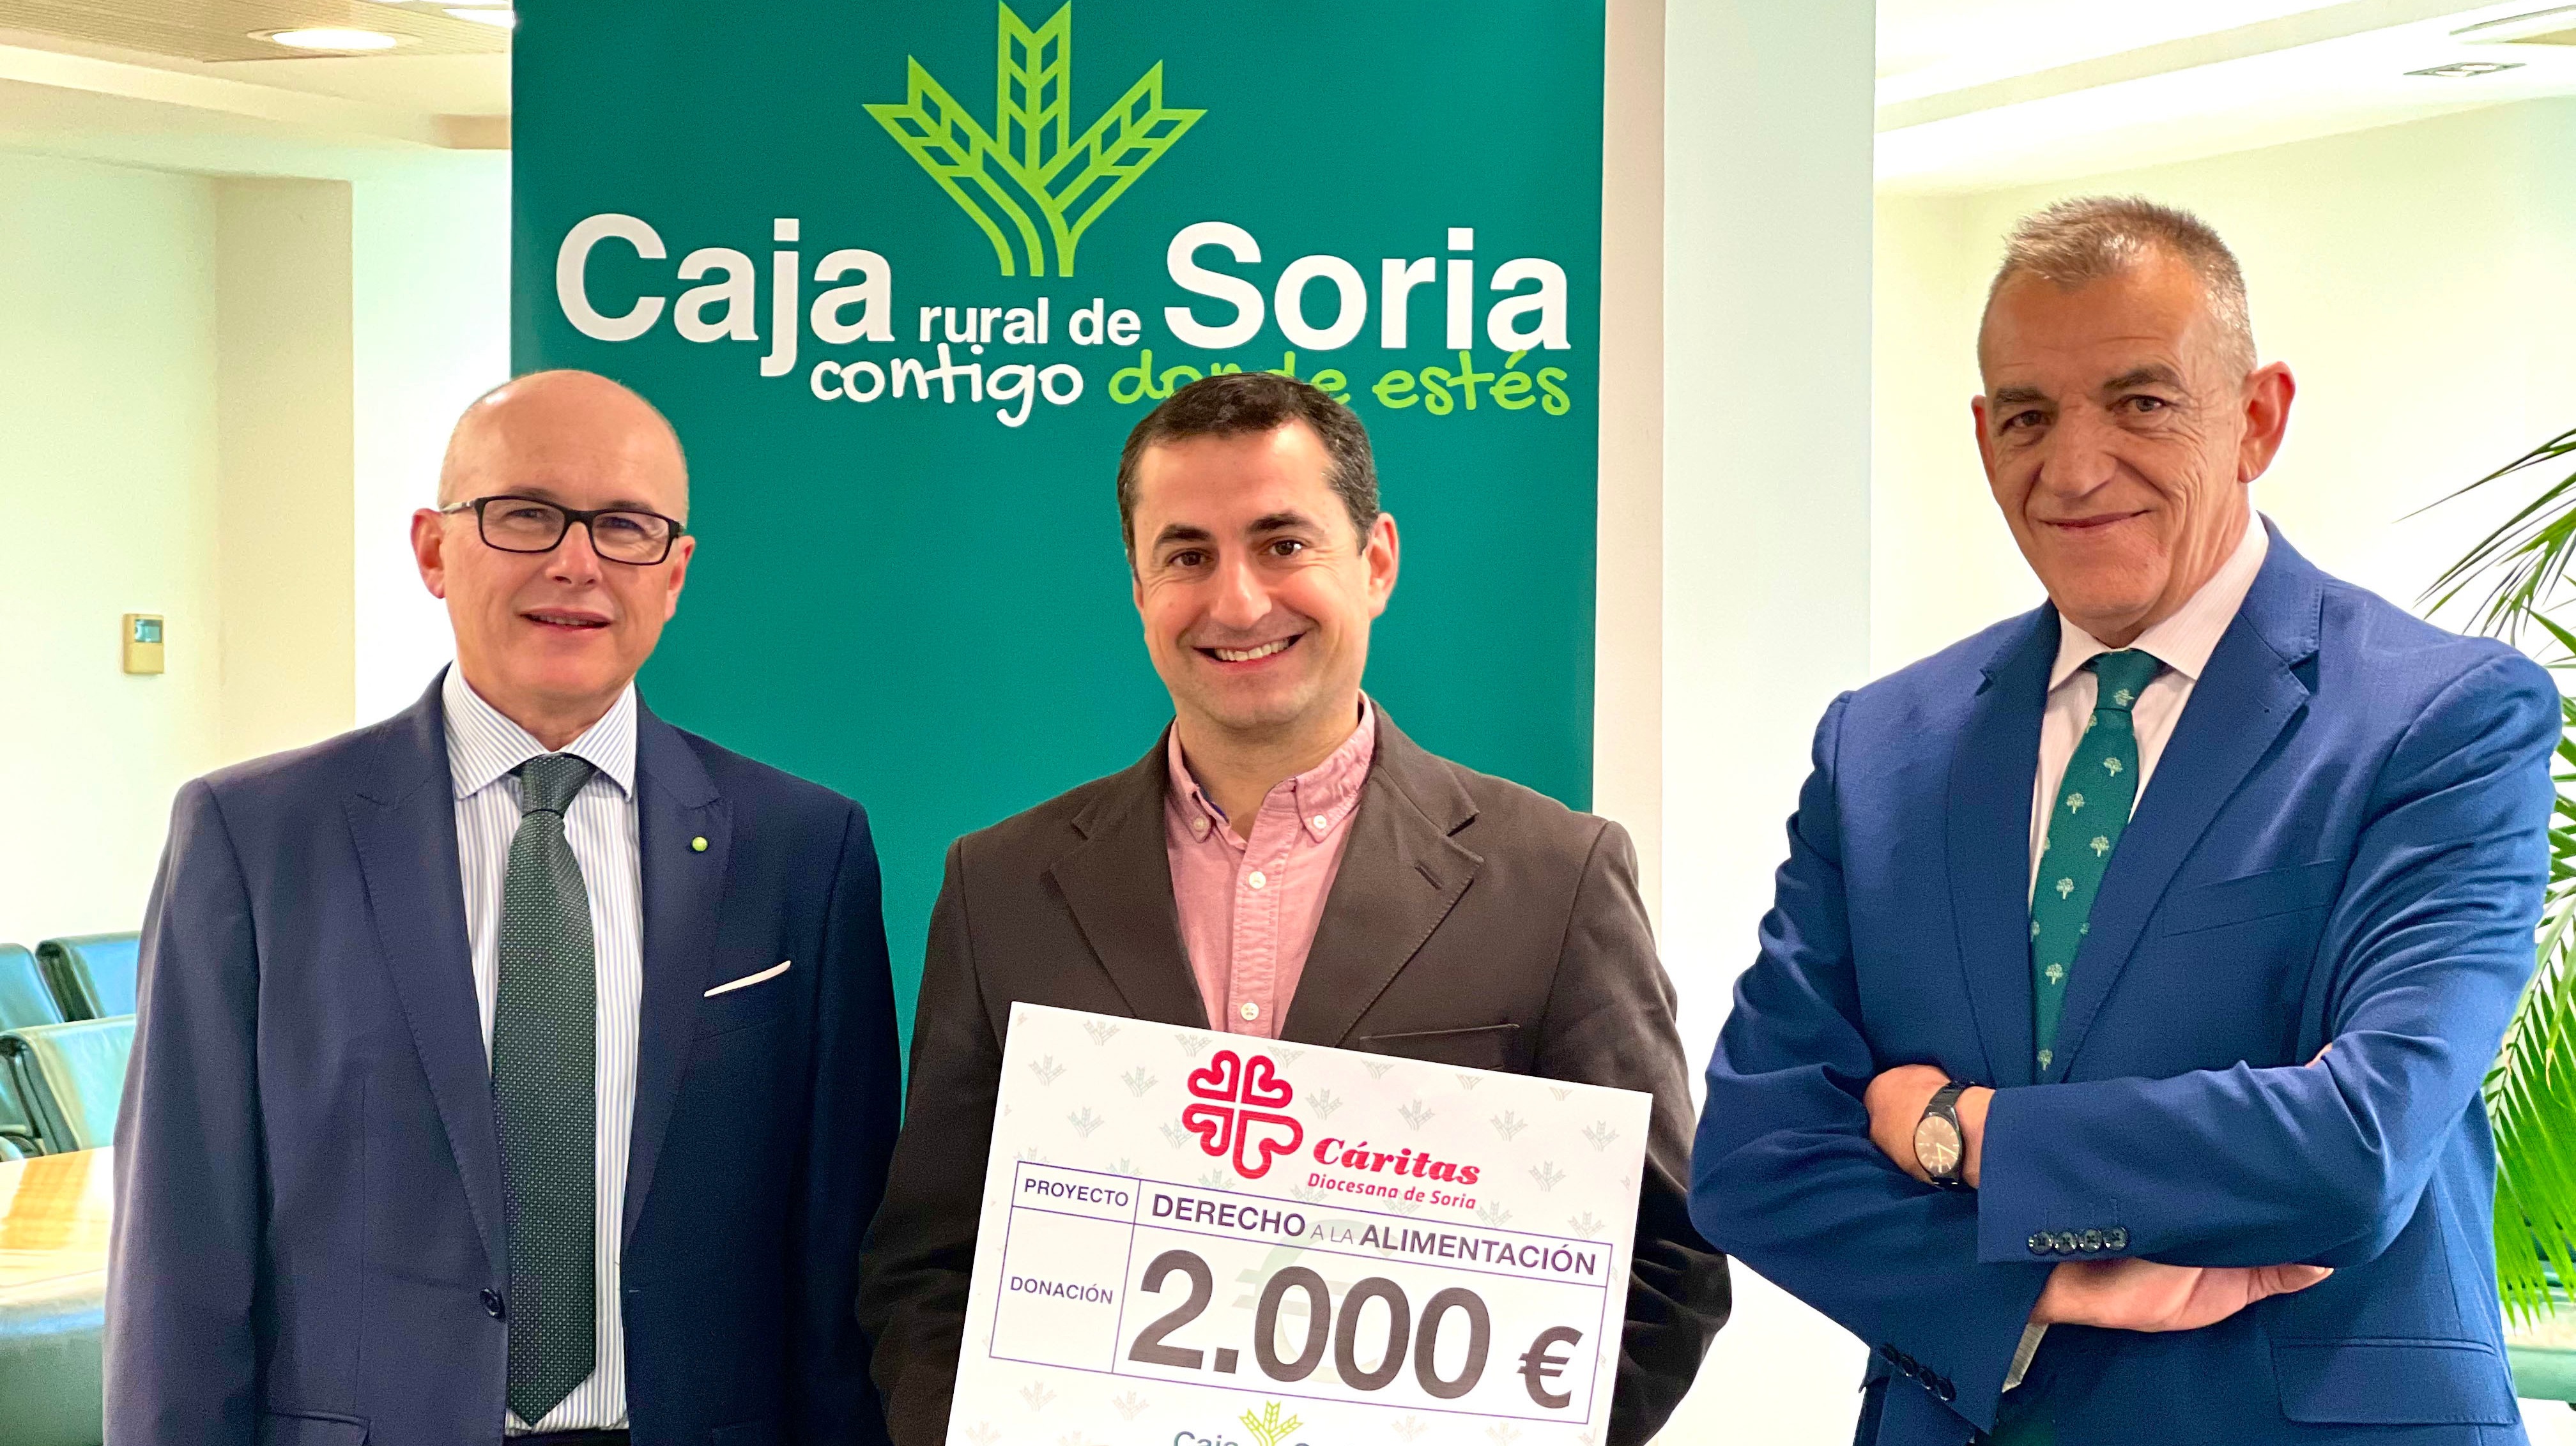 Caja Rural de Soria dona 2.000€ a Cáritas para apoyar su Programa de Alimentos